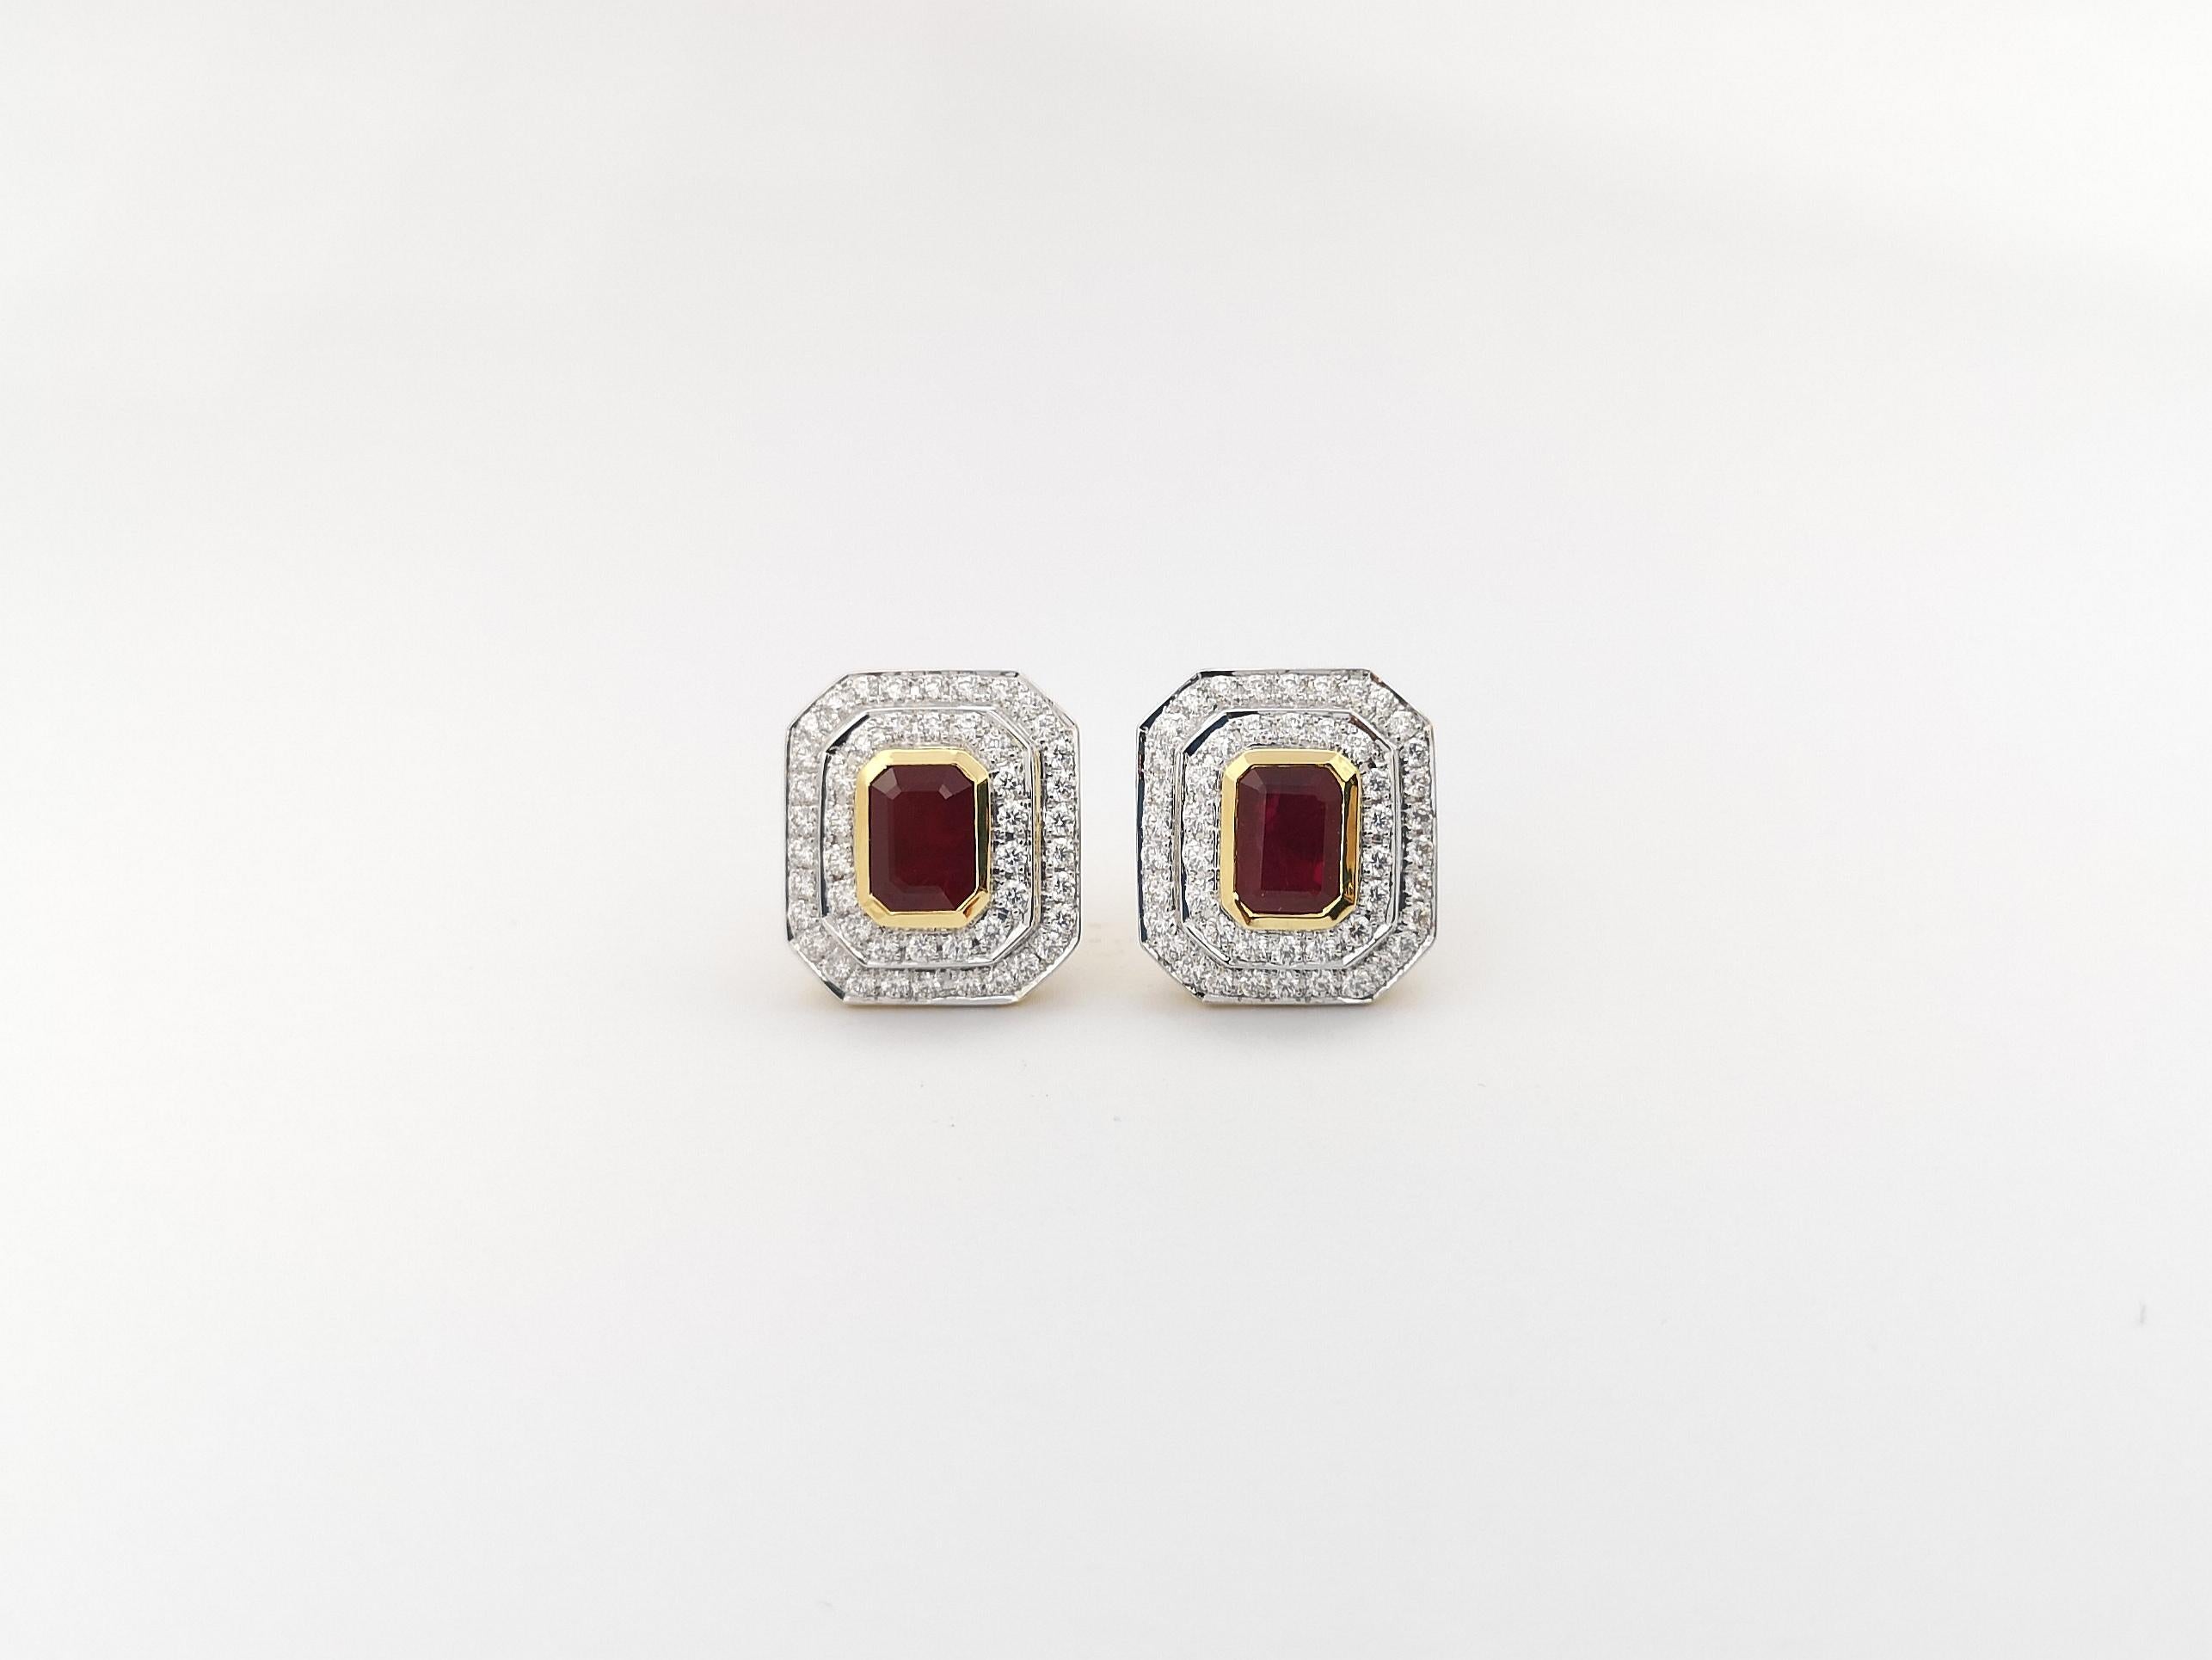 Emerald Cut Ruby with Diamond Earrings set in 18 Karat Gold Settings For Sale